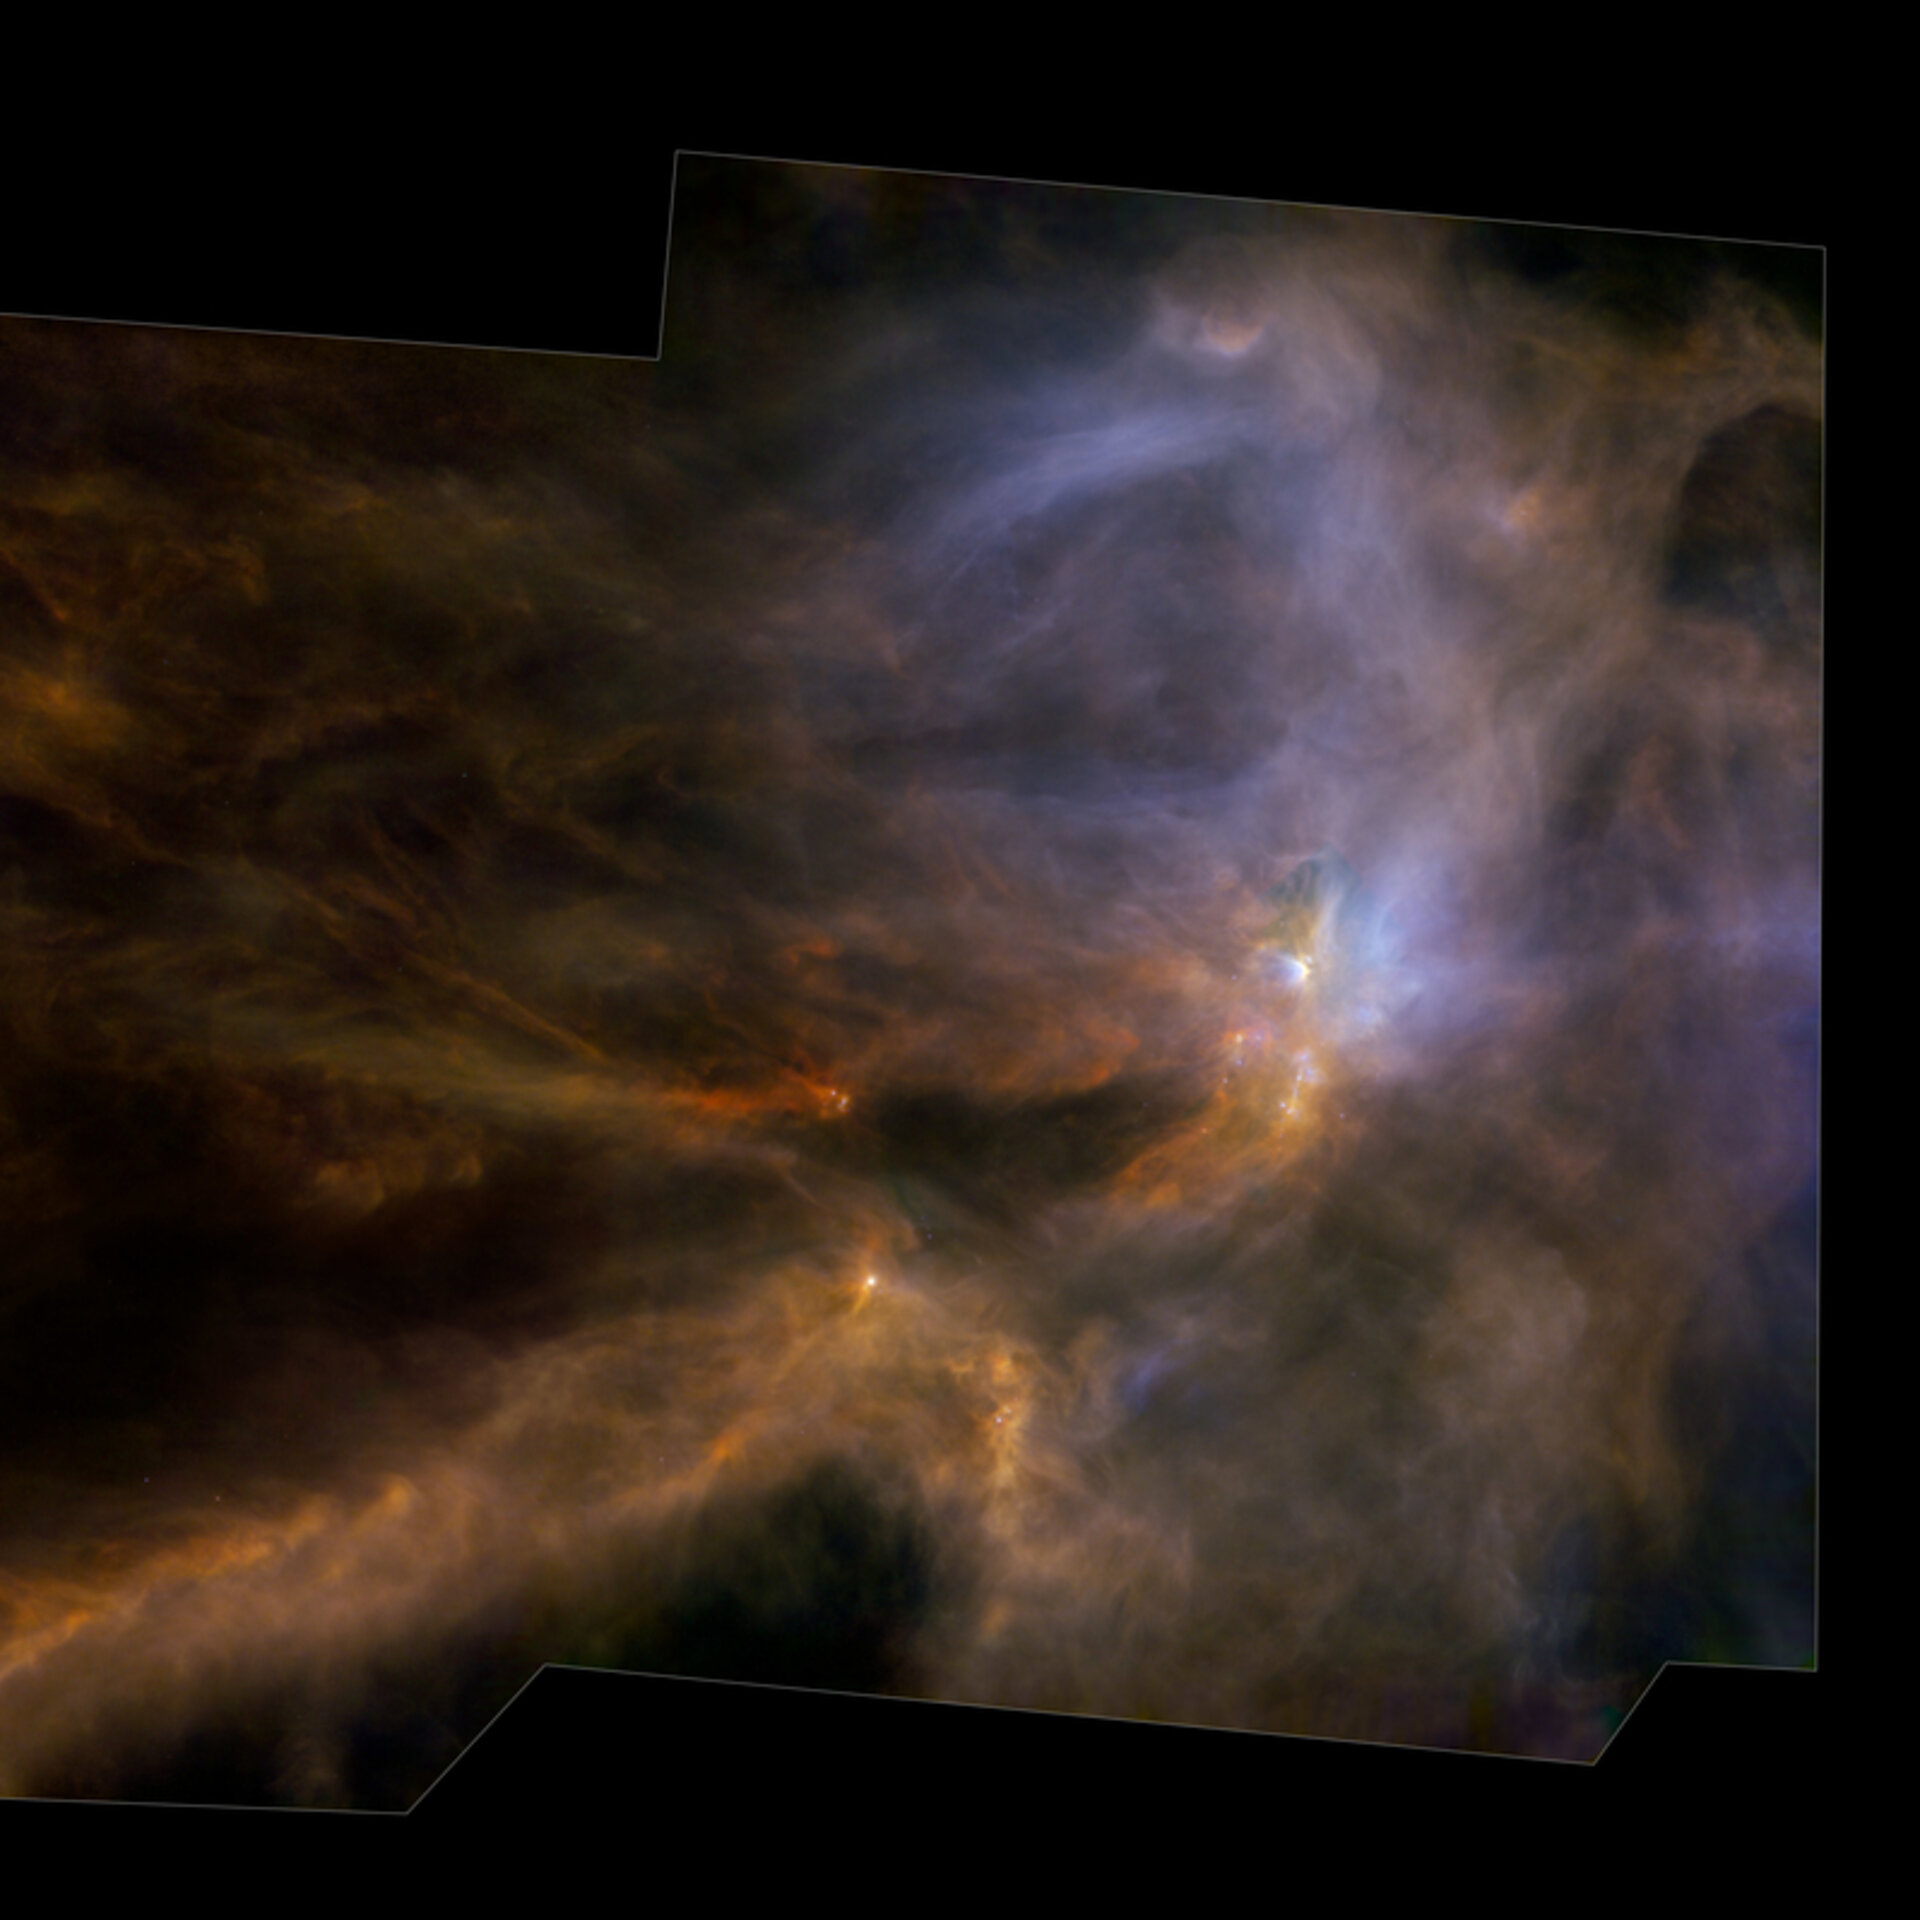 Herschel’s view of a star nursery